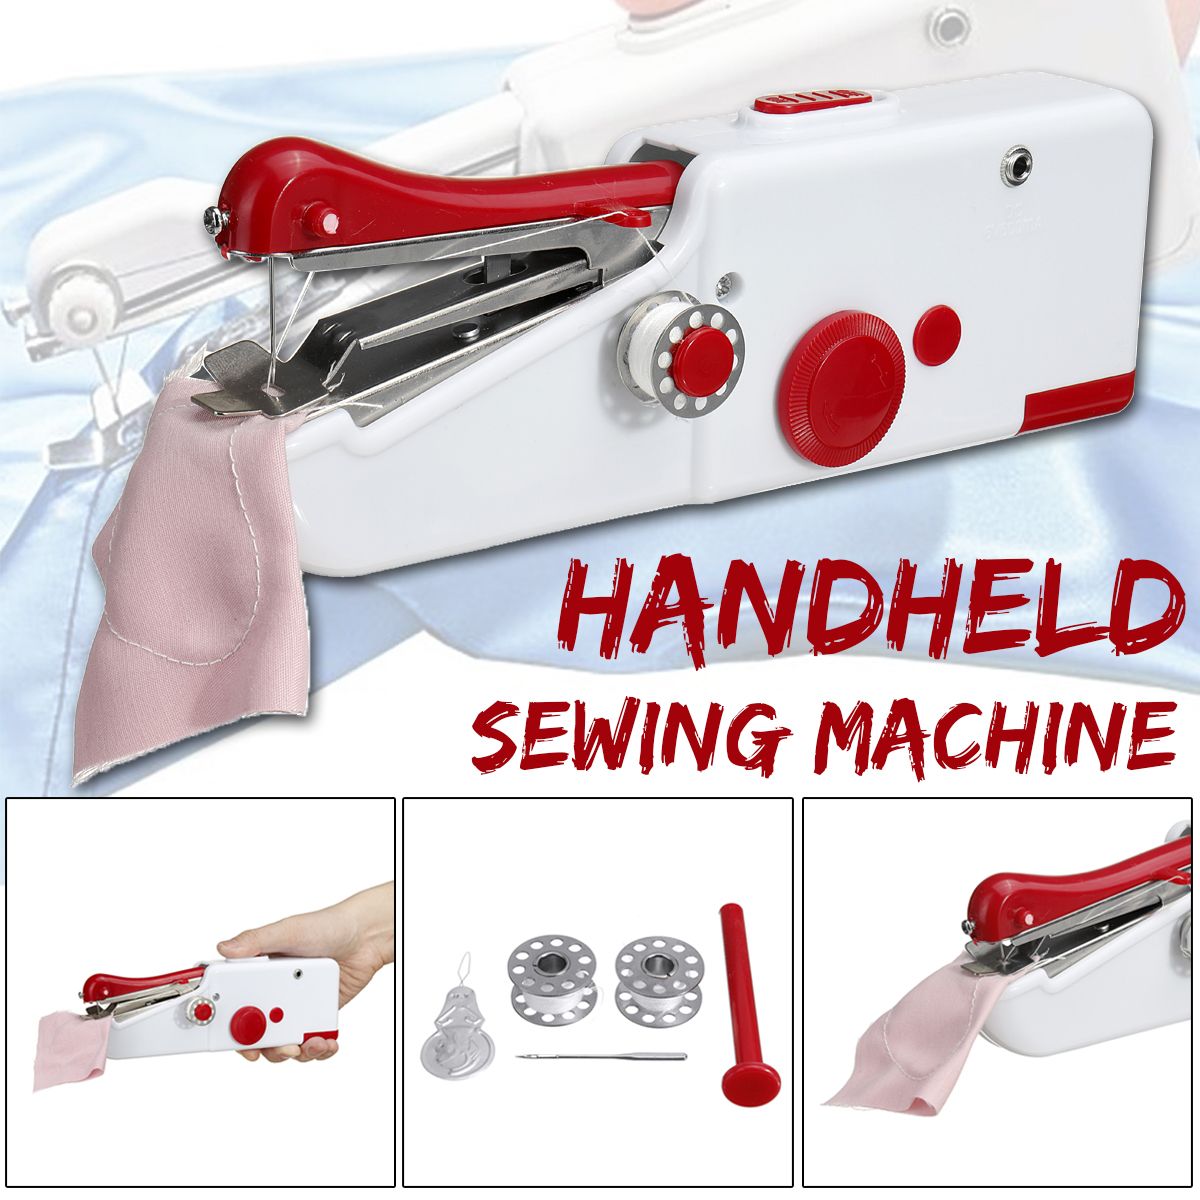 Portable-Mini-Electric-Handheld-Sewing-Machine-Travel-Household-Cordless-Stitch-Sew-Quick-Stitch-1610037